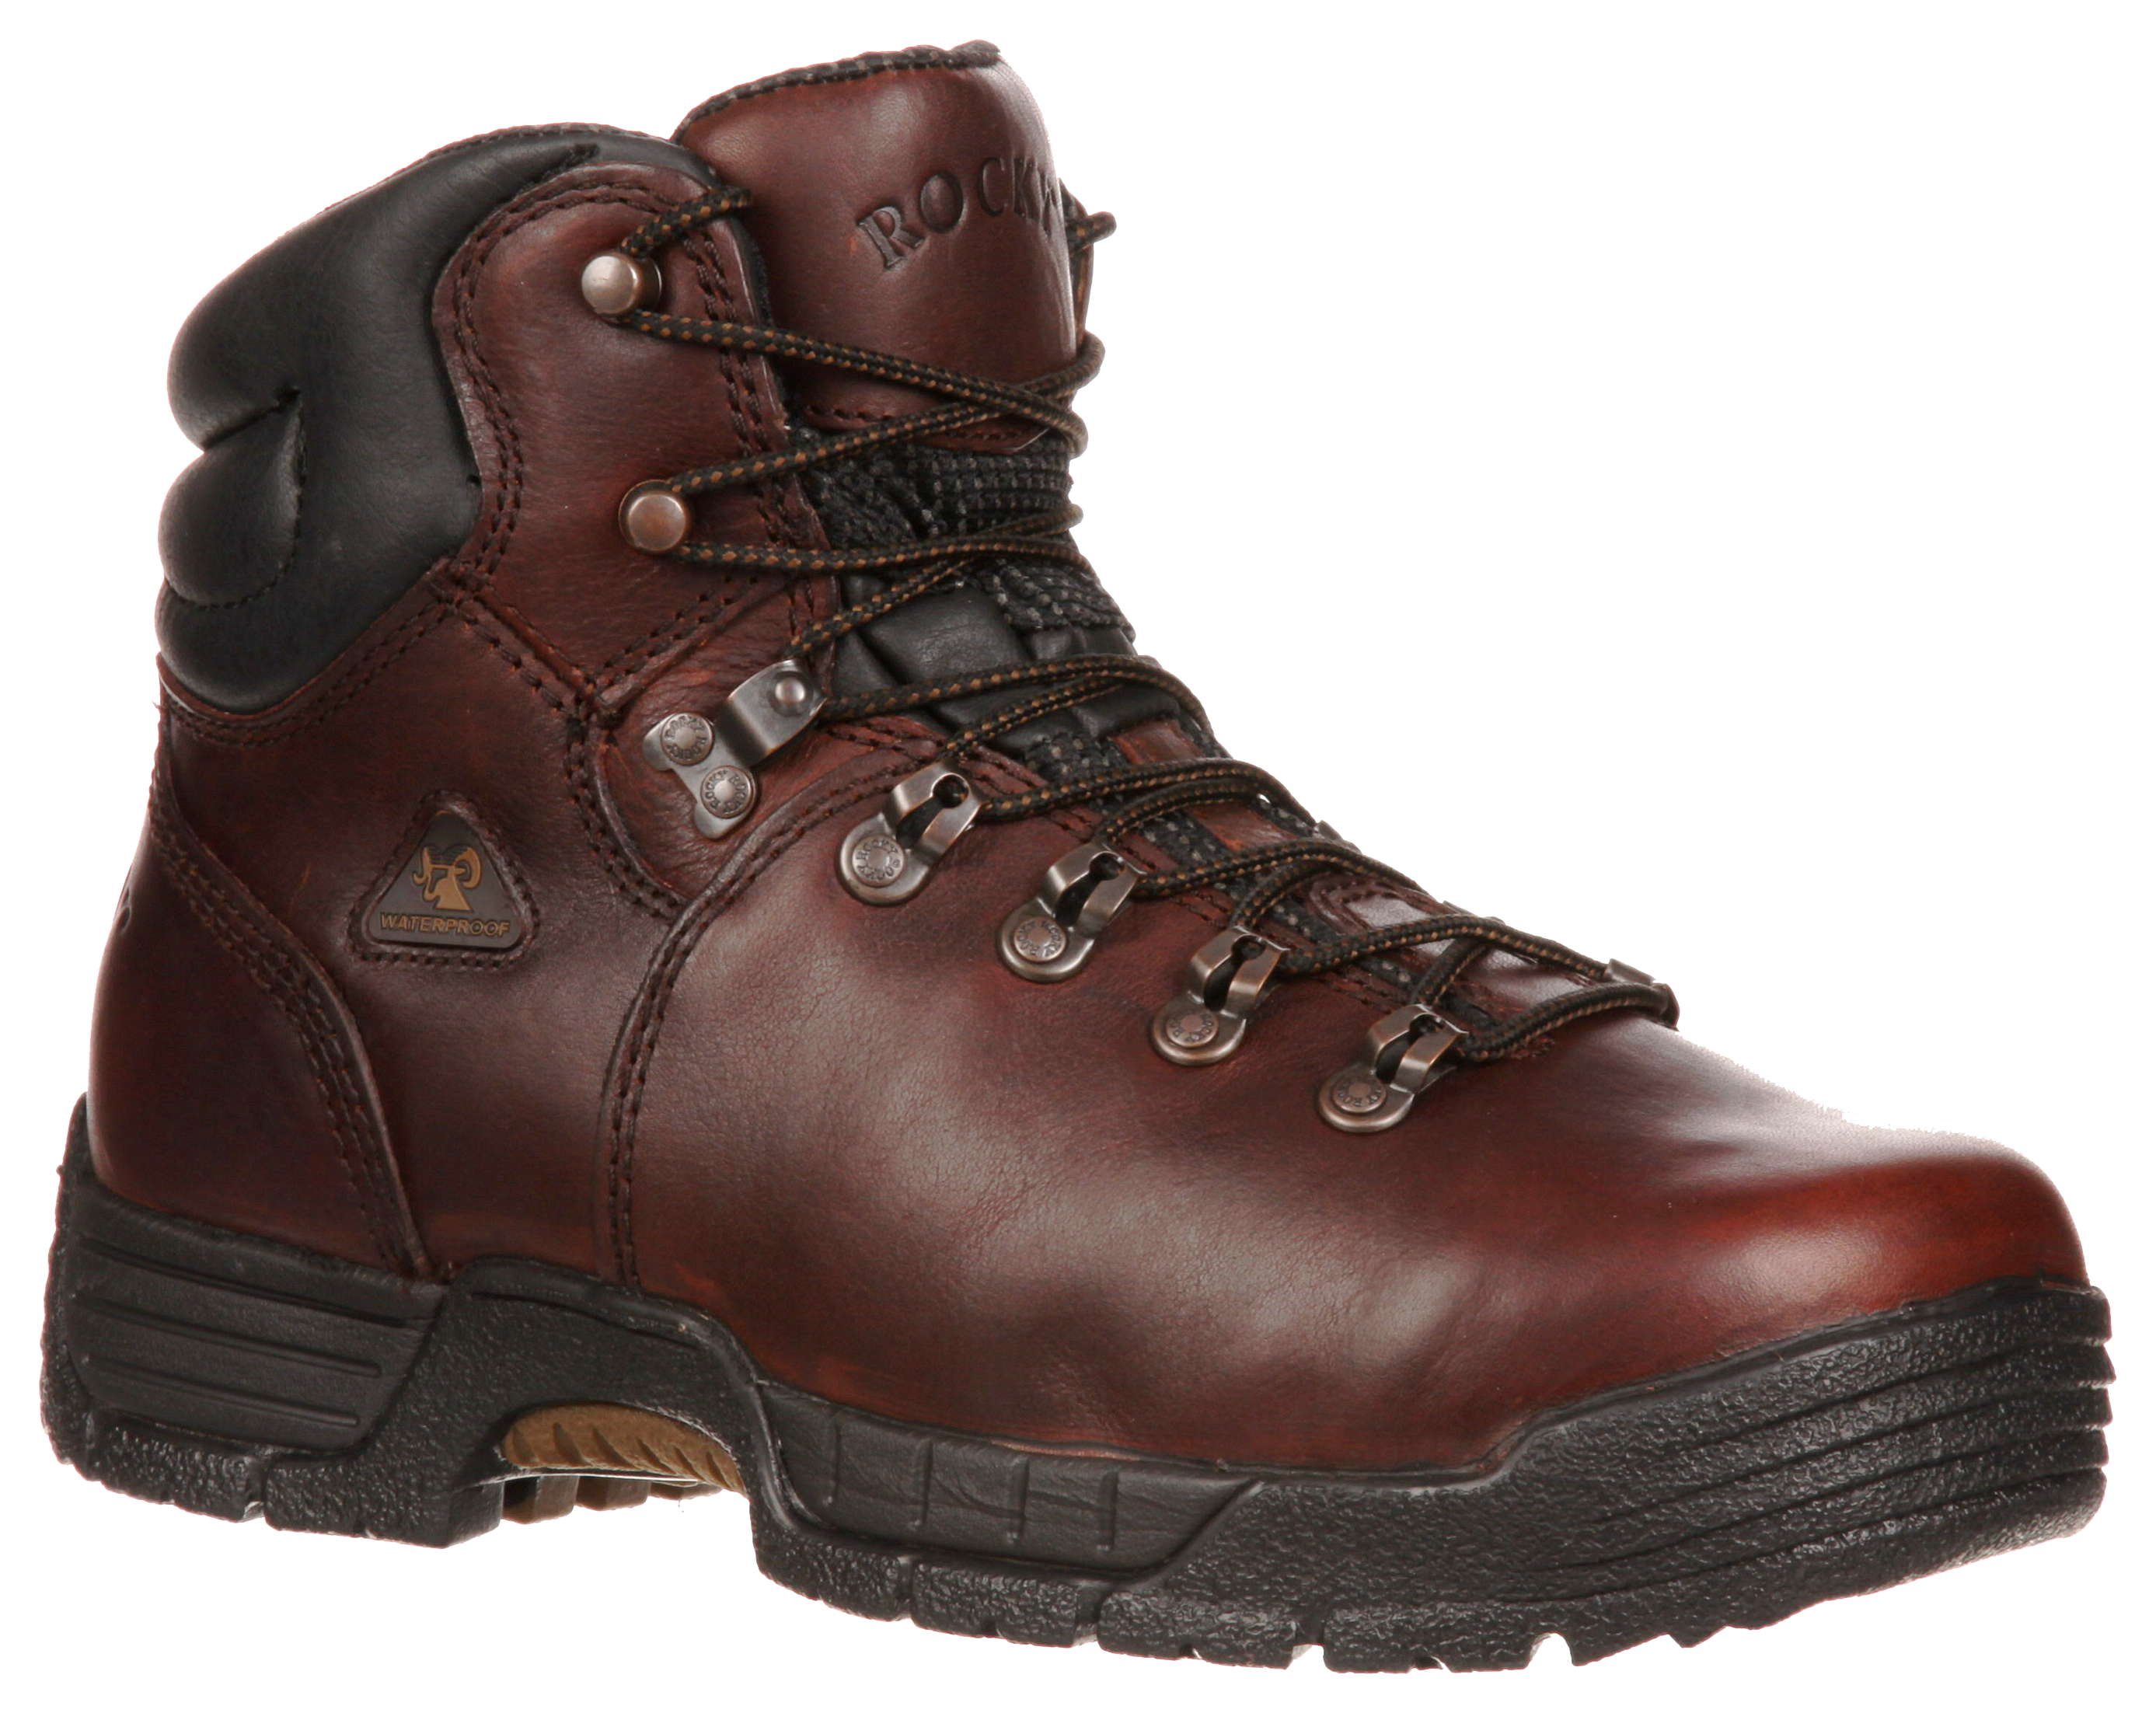 ROCKY MobiLite Waterproof Steel Toe Work Boots for Men - Brown - 8 M